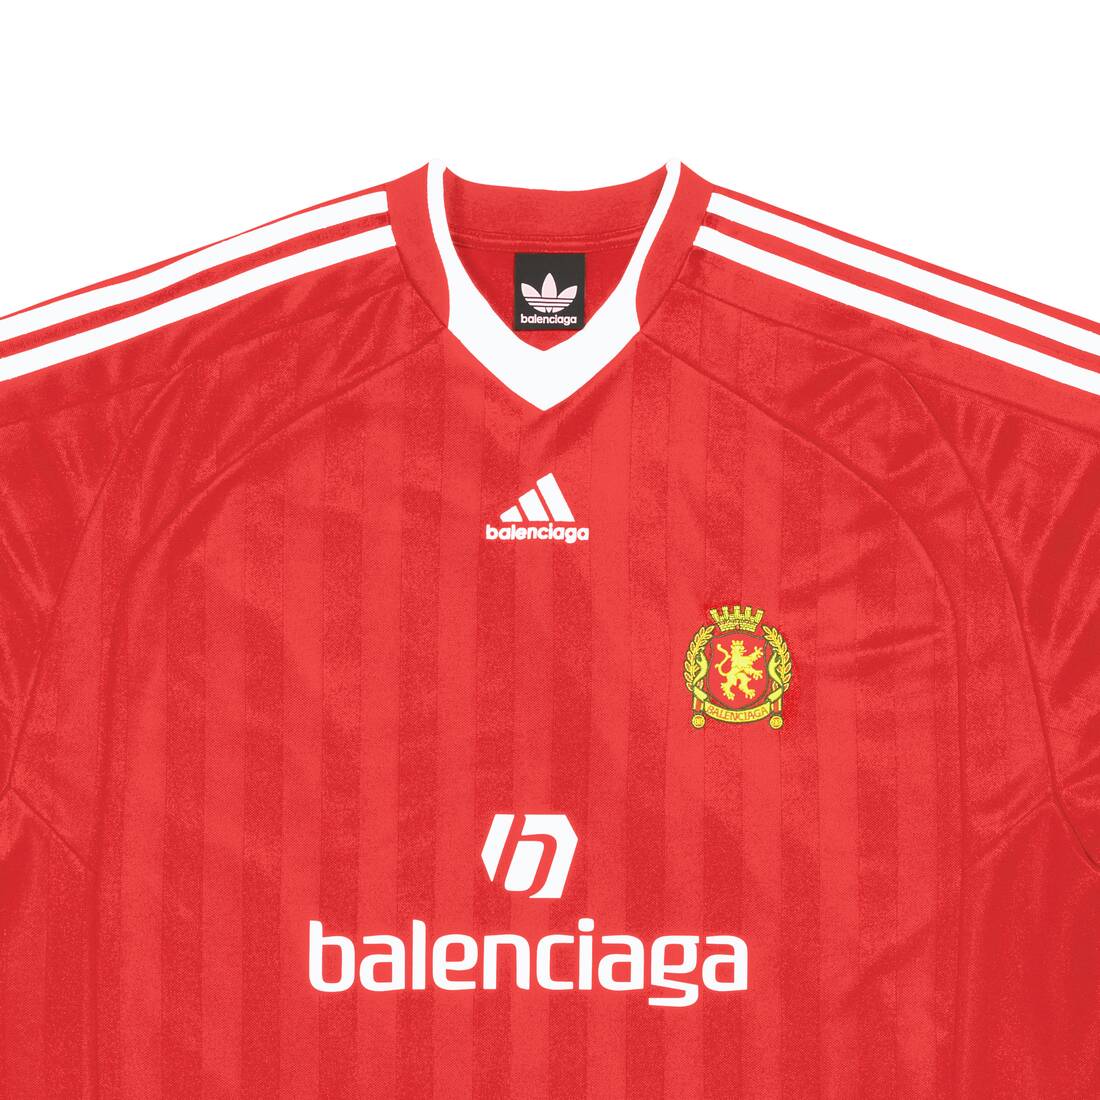 Balenciaga / Adidas Soccer T-shirt Oversized in Red